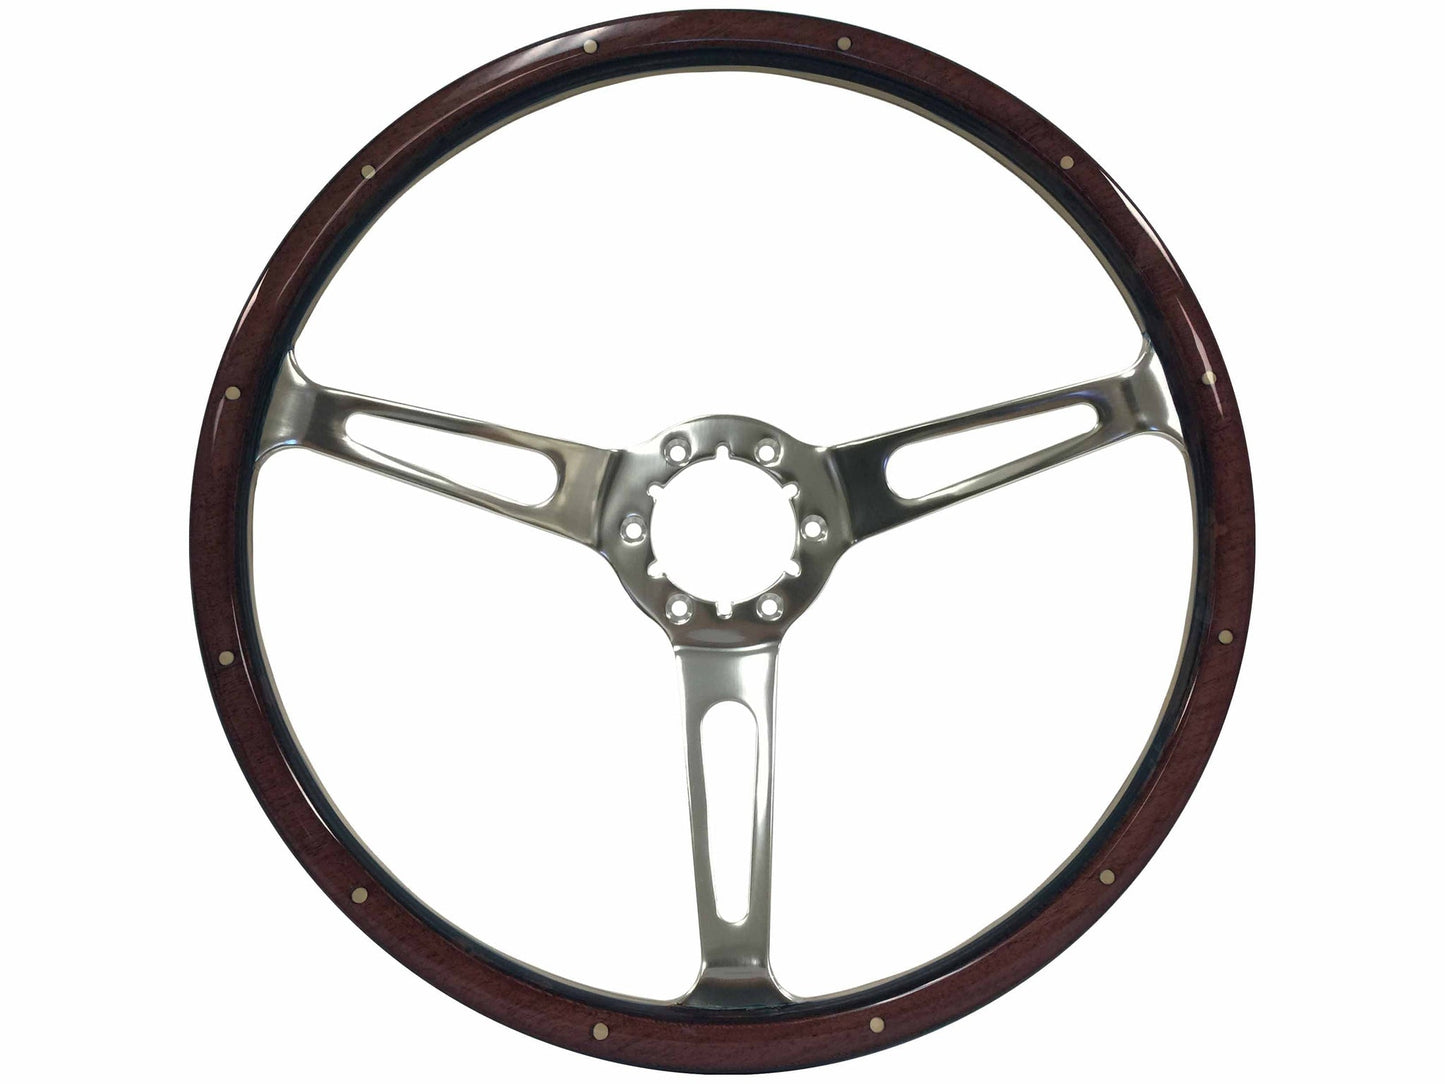 2001-17 Toyota Corolla Steering Wheel Kit | Deluxe Espresso Wood | ST3553A